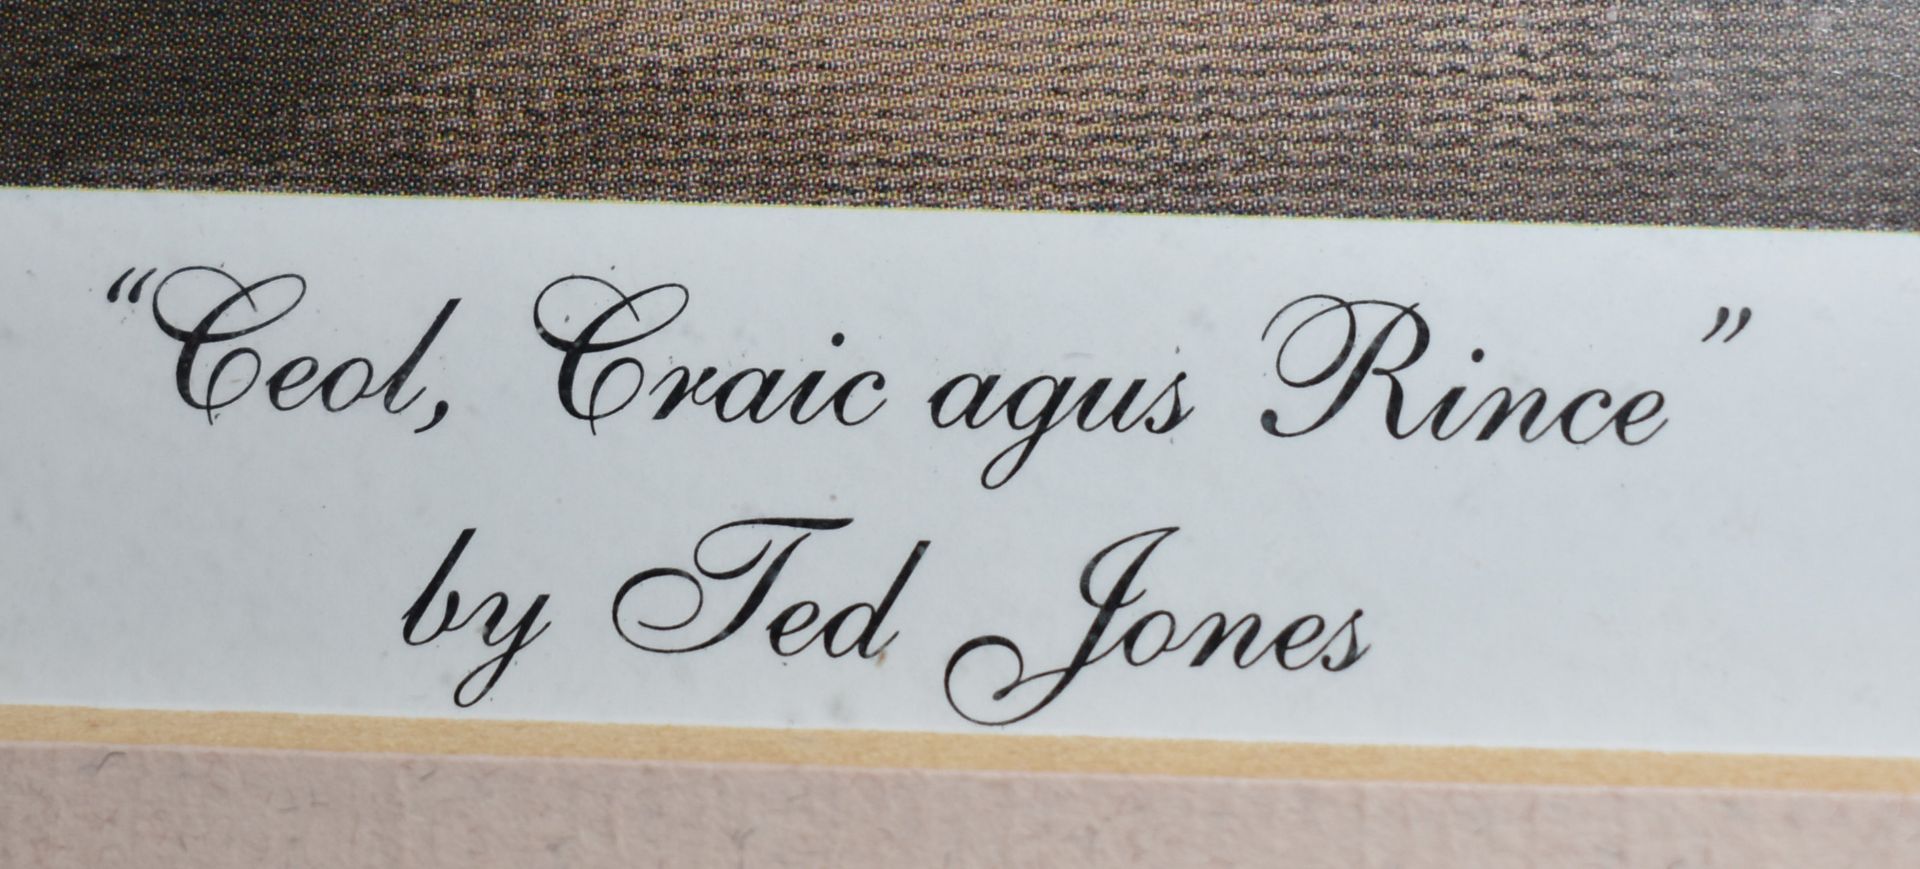 TED JONES (B. 1952) - COEL, CRAIC ANGUS RINCE - 2000 - Bild 5 aus 8